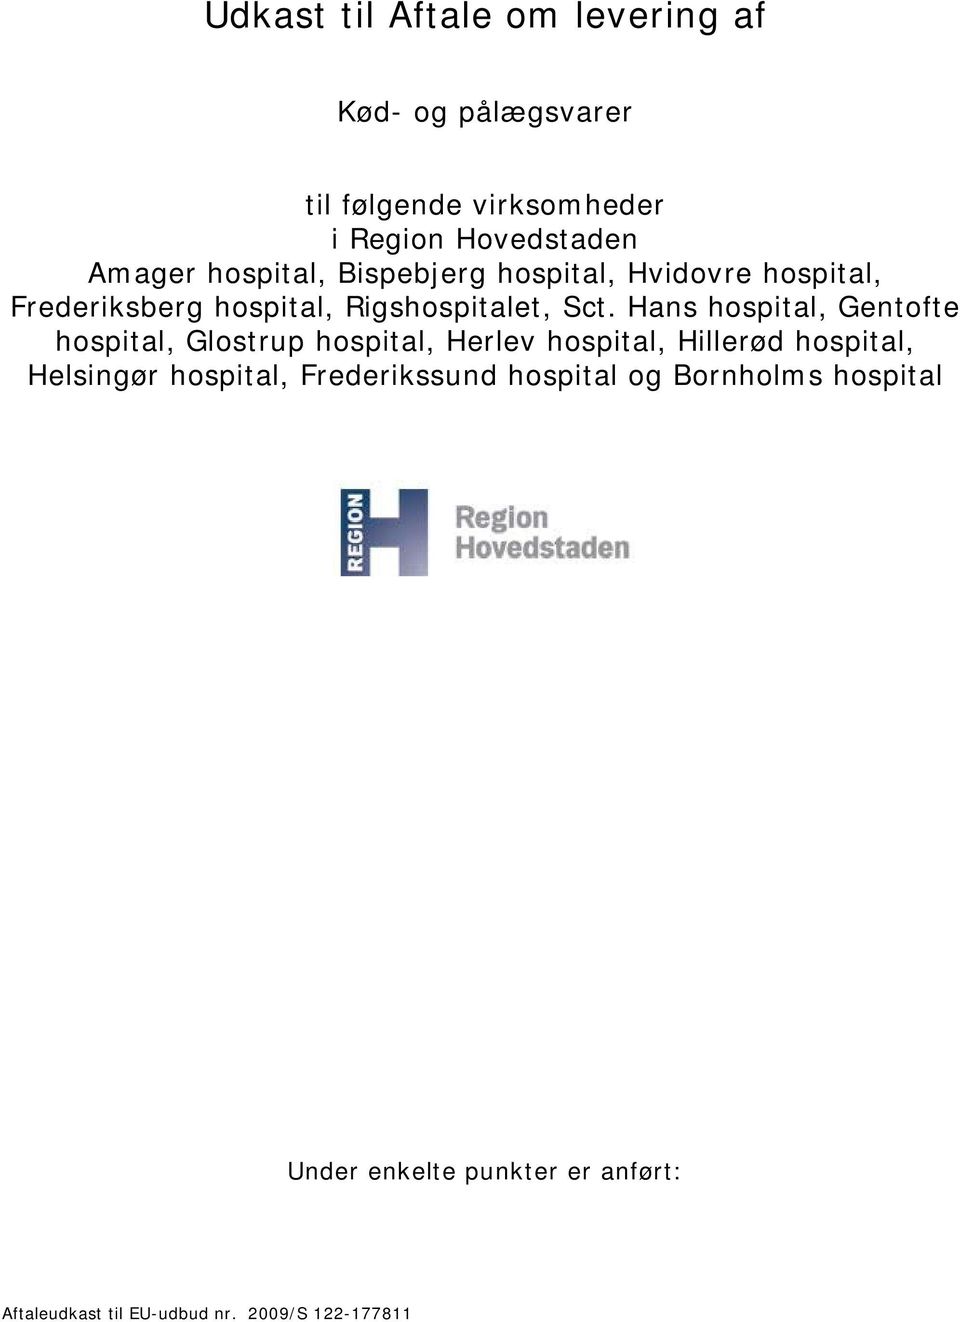 Hans hospital, Gentofte hospital, Glostrup hospital, Herlev hospital, Hillerød hospital, Helsingør